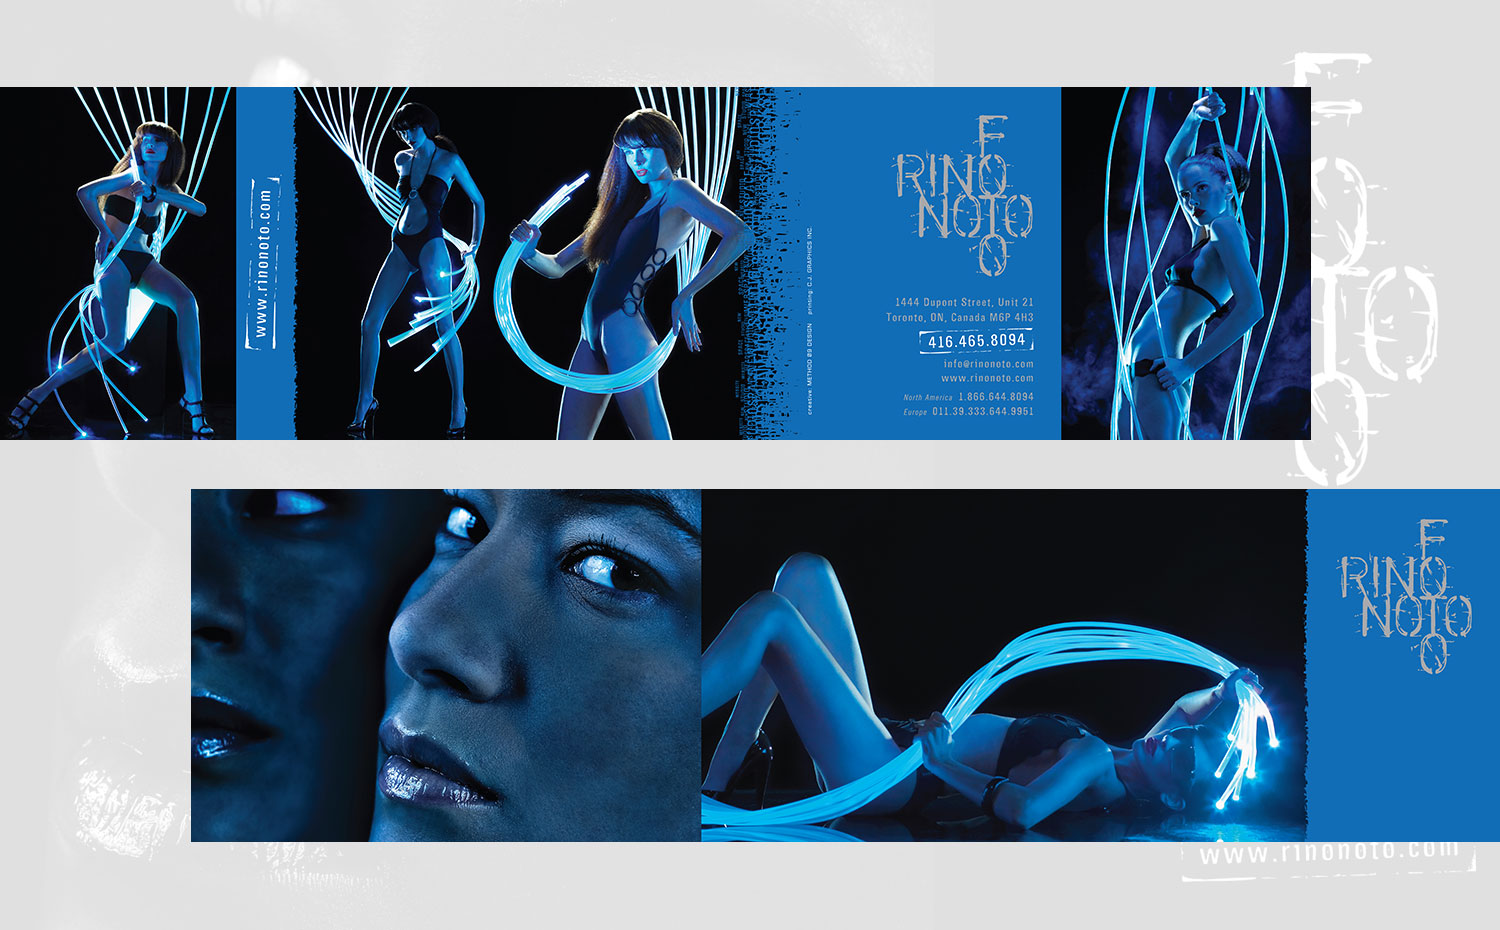 Rino Noto Foto | Direct mail promo series